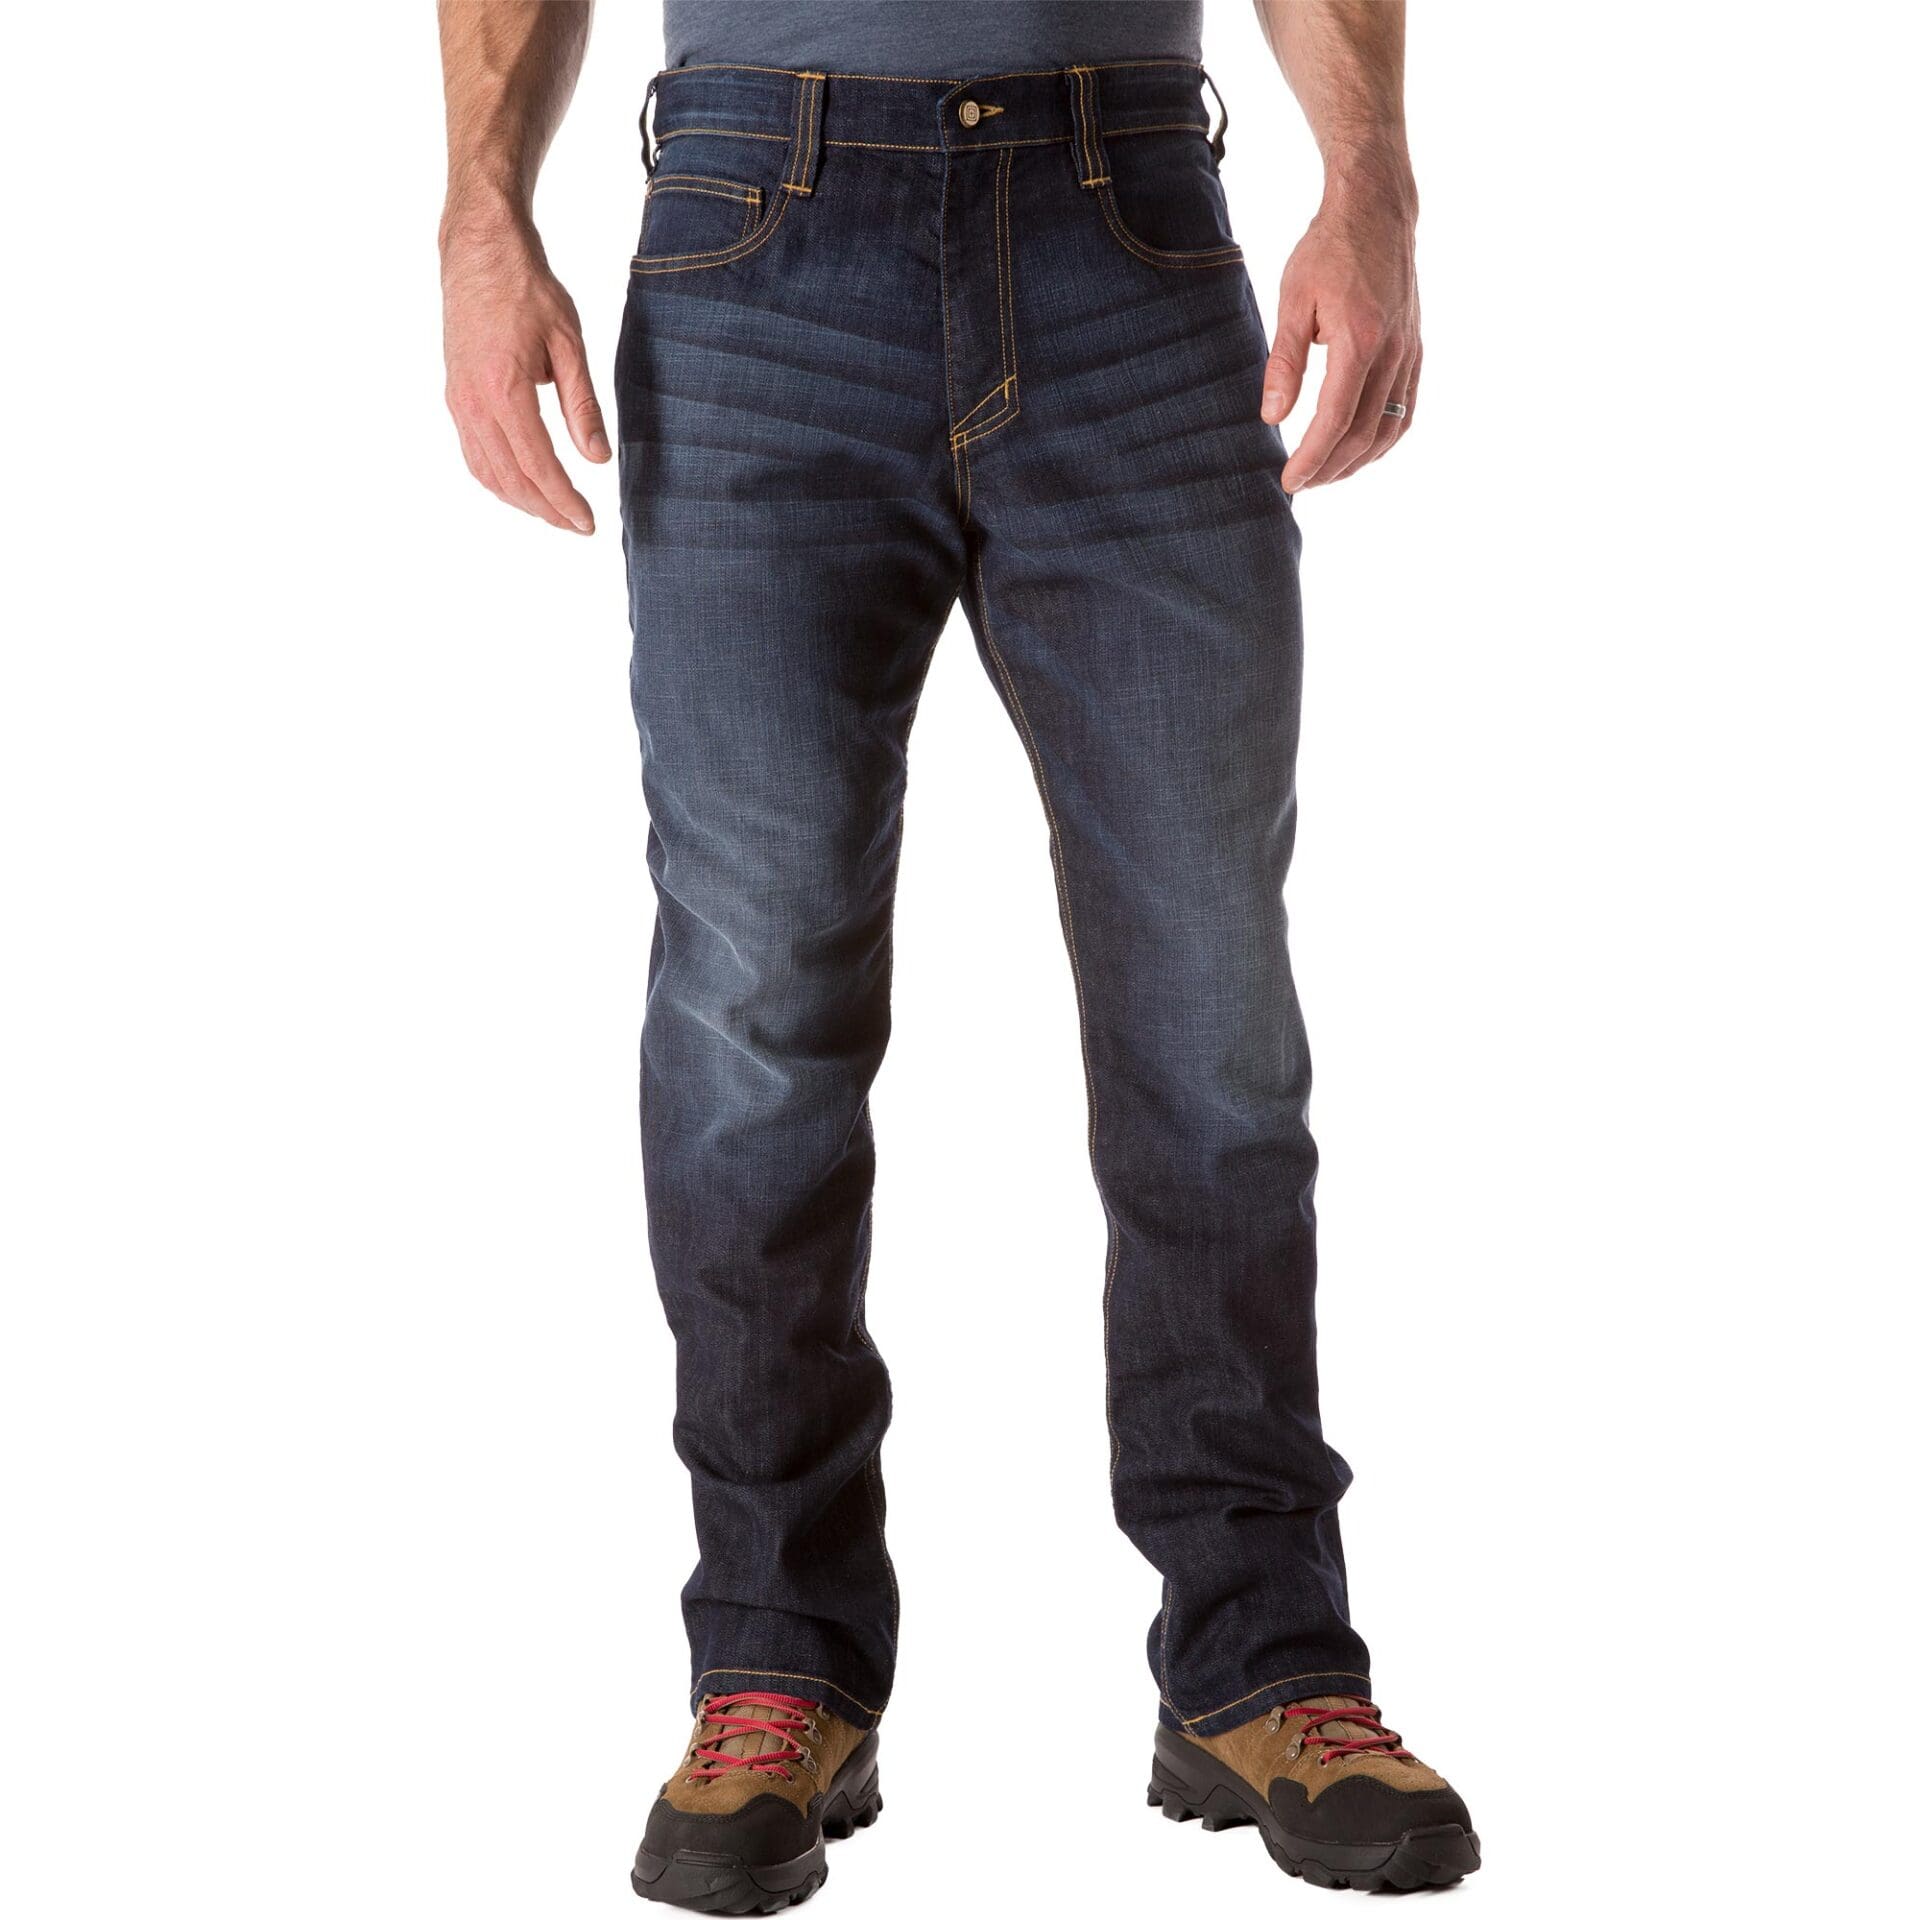 5.11 Defender Flex jeans The Best Pants for Concealed Carry